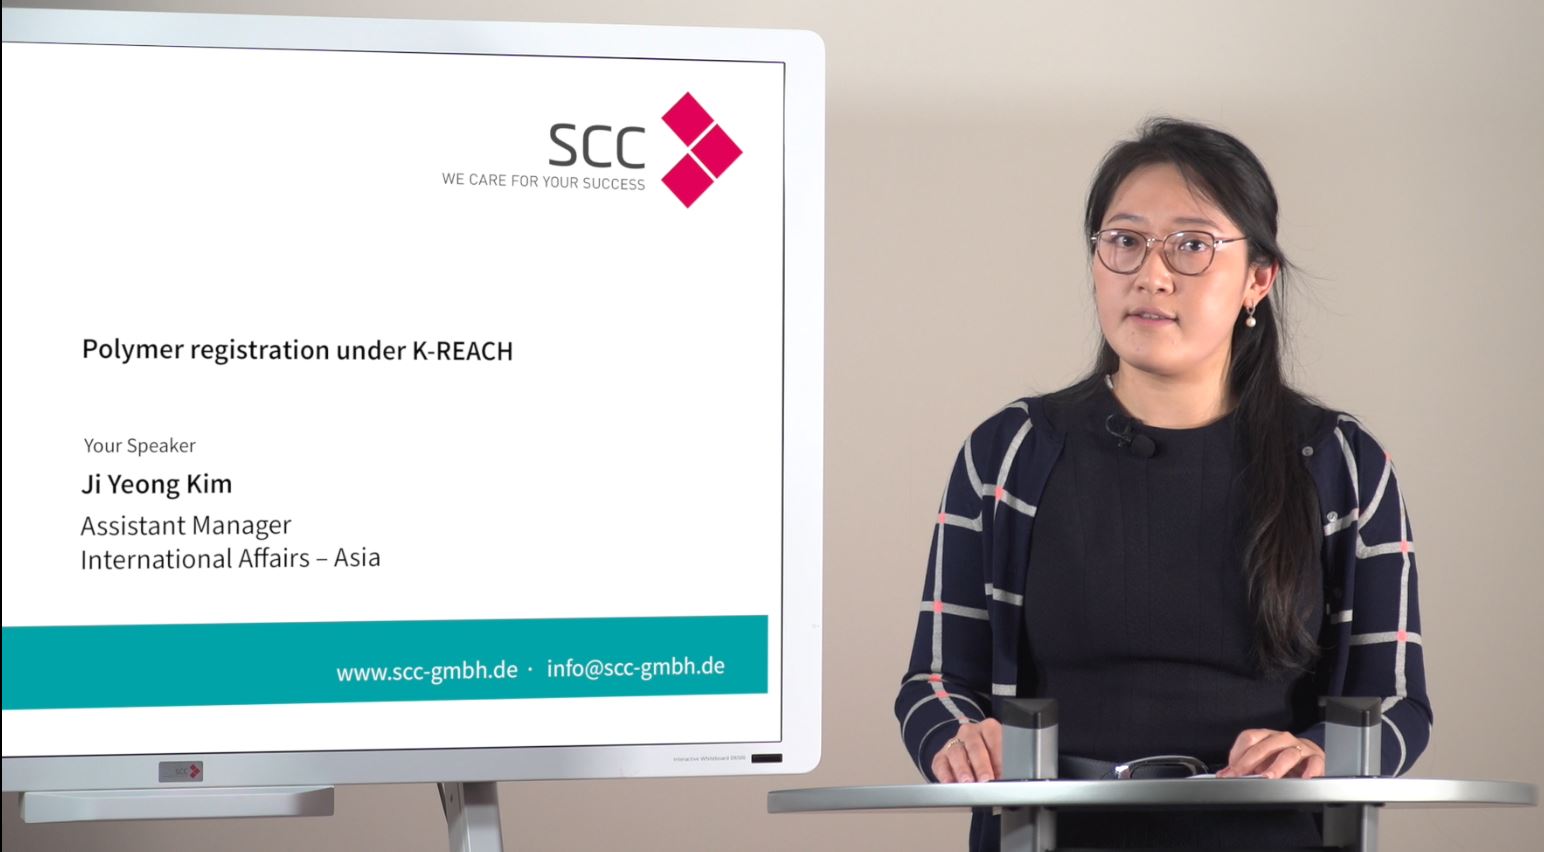 SCC video guidance on polymer registration under K-REACH